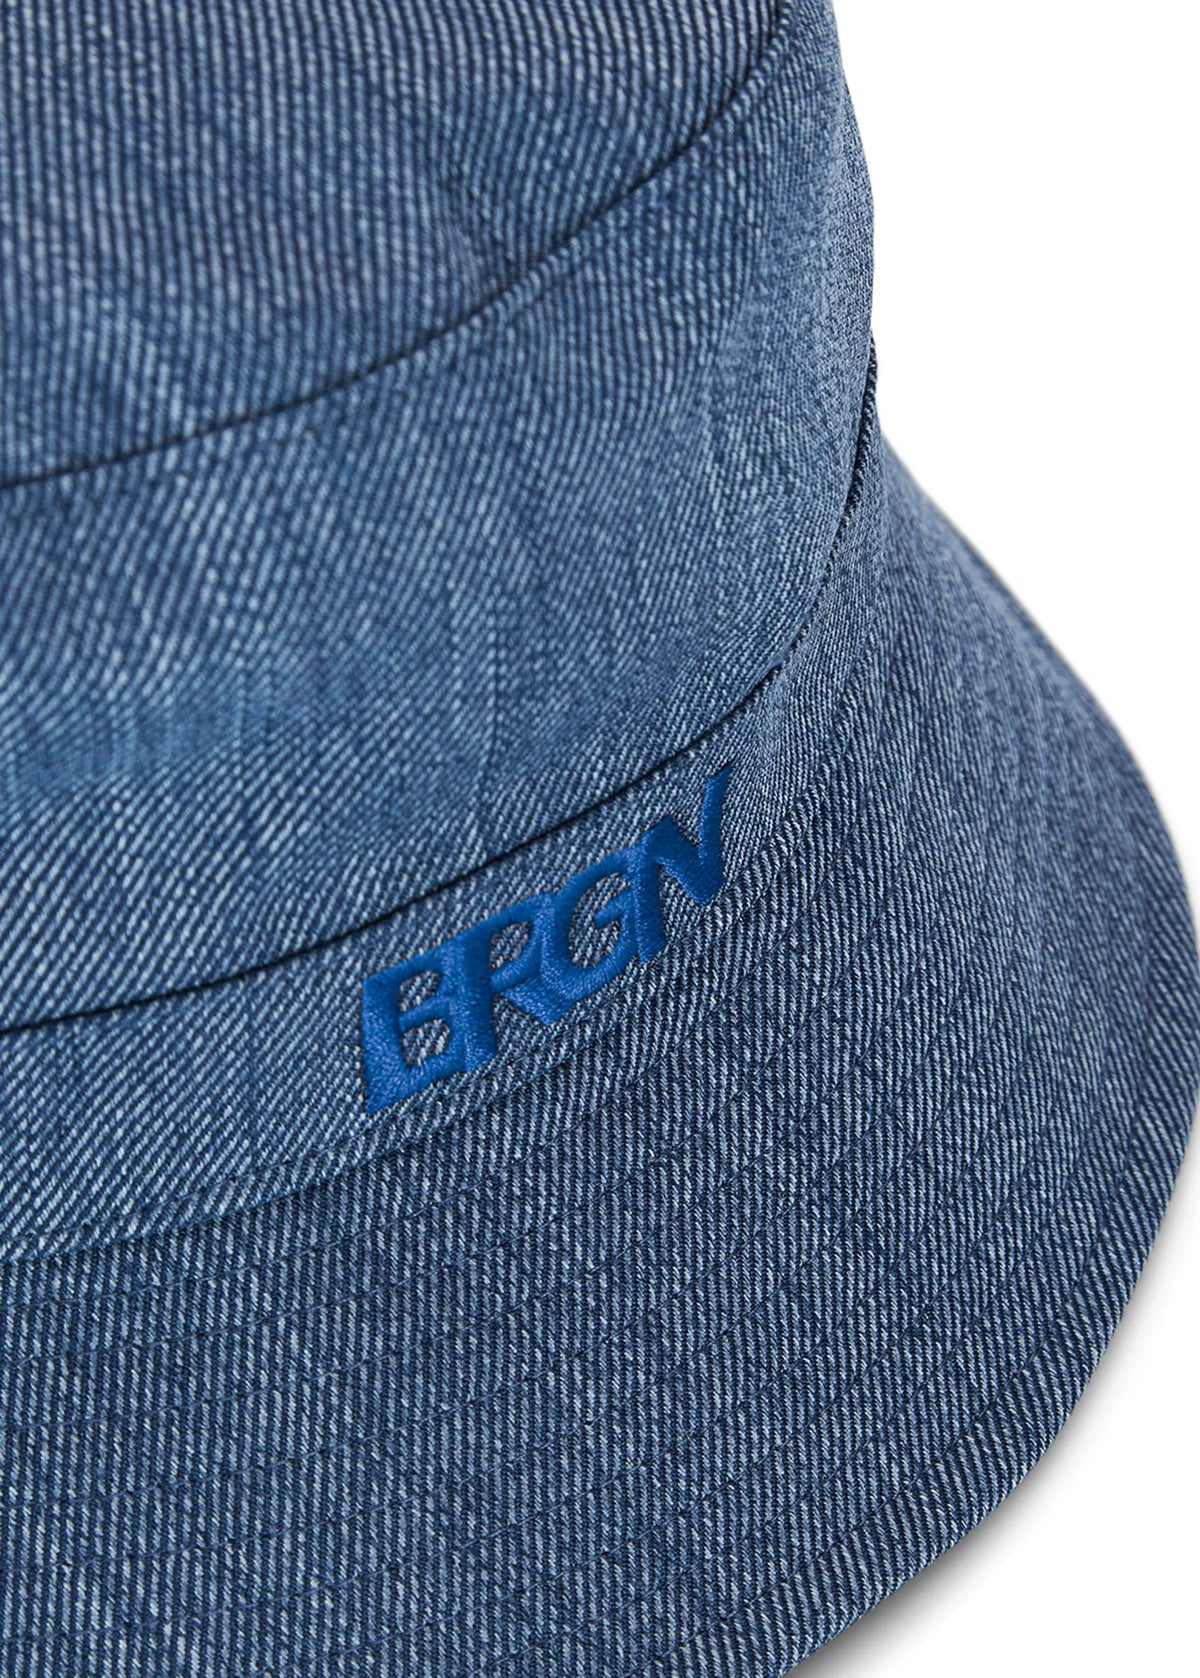 Recycled polyester denim blue waterproof bucket hat